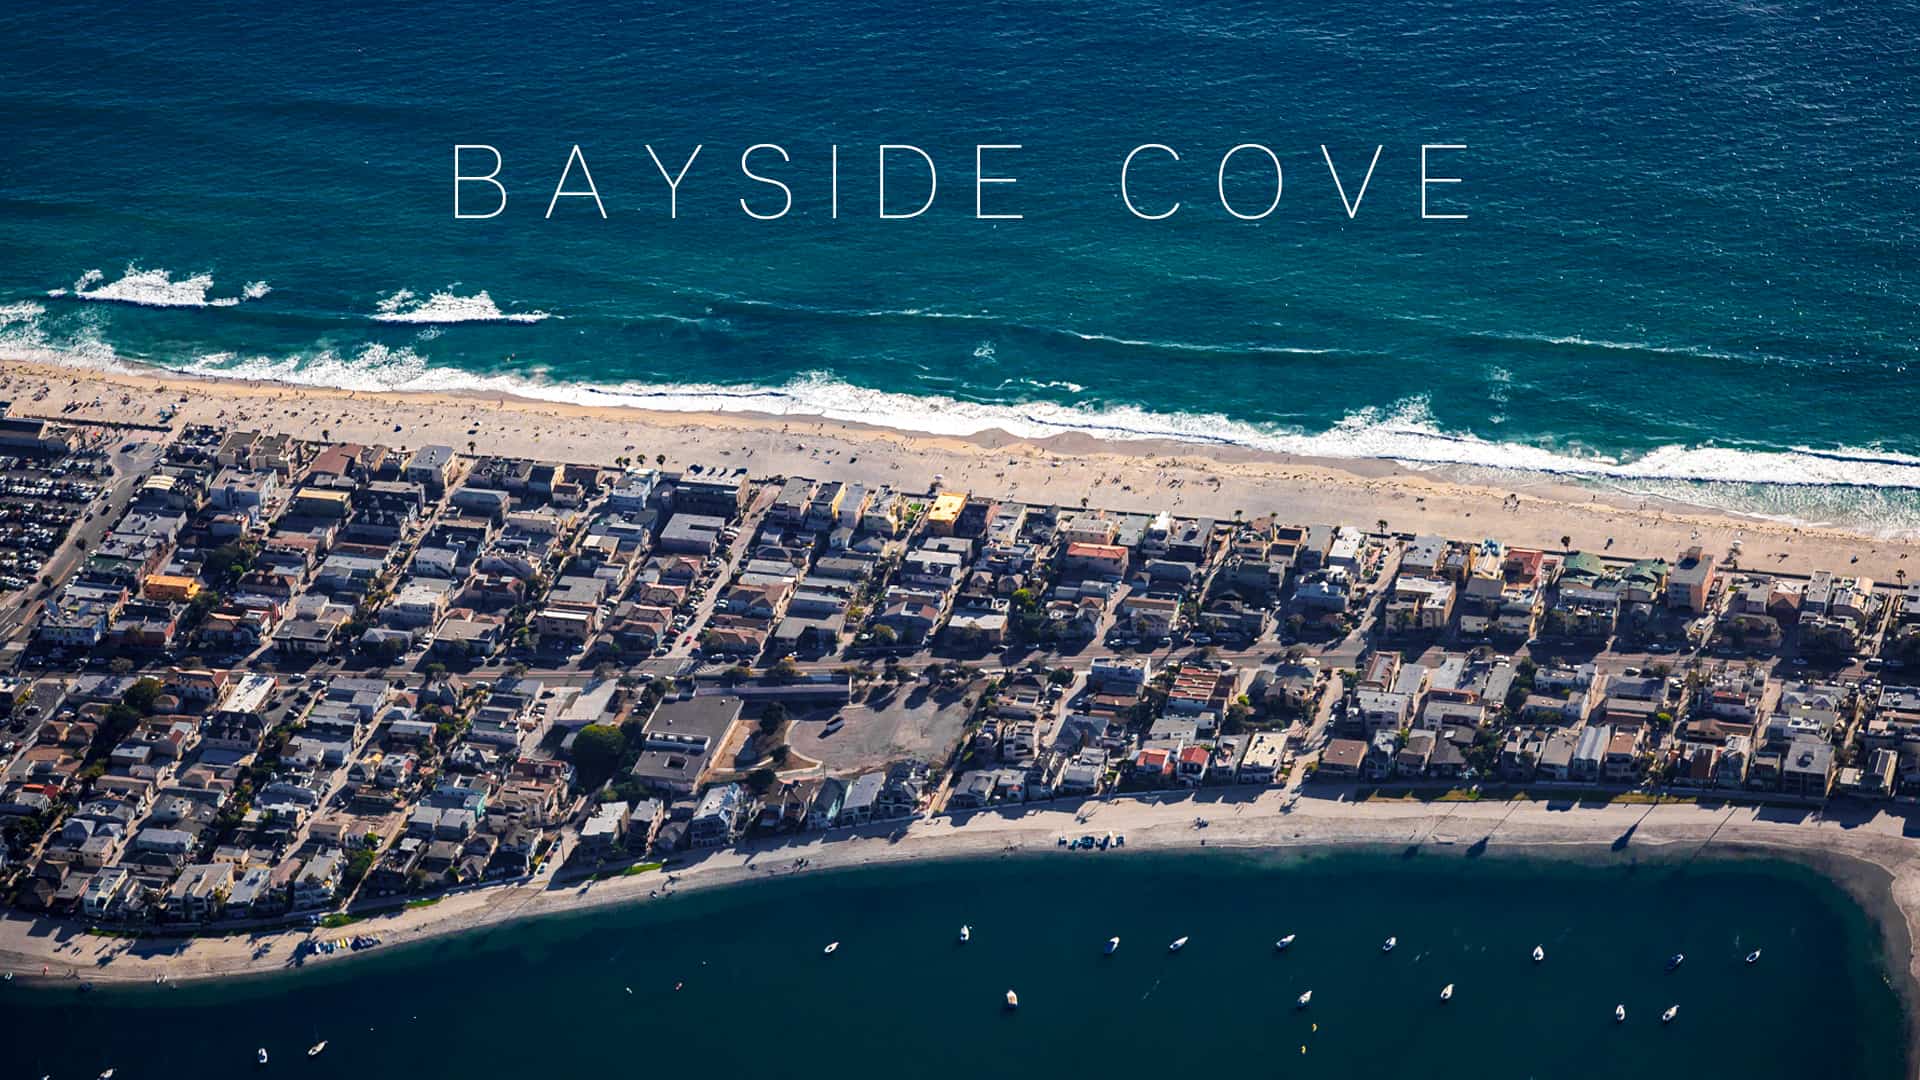 Bayside Cove in Mission Beach, CA